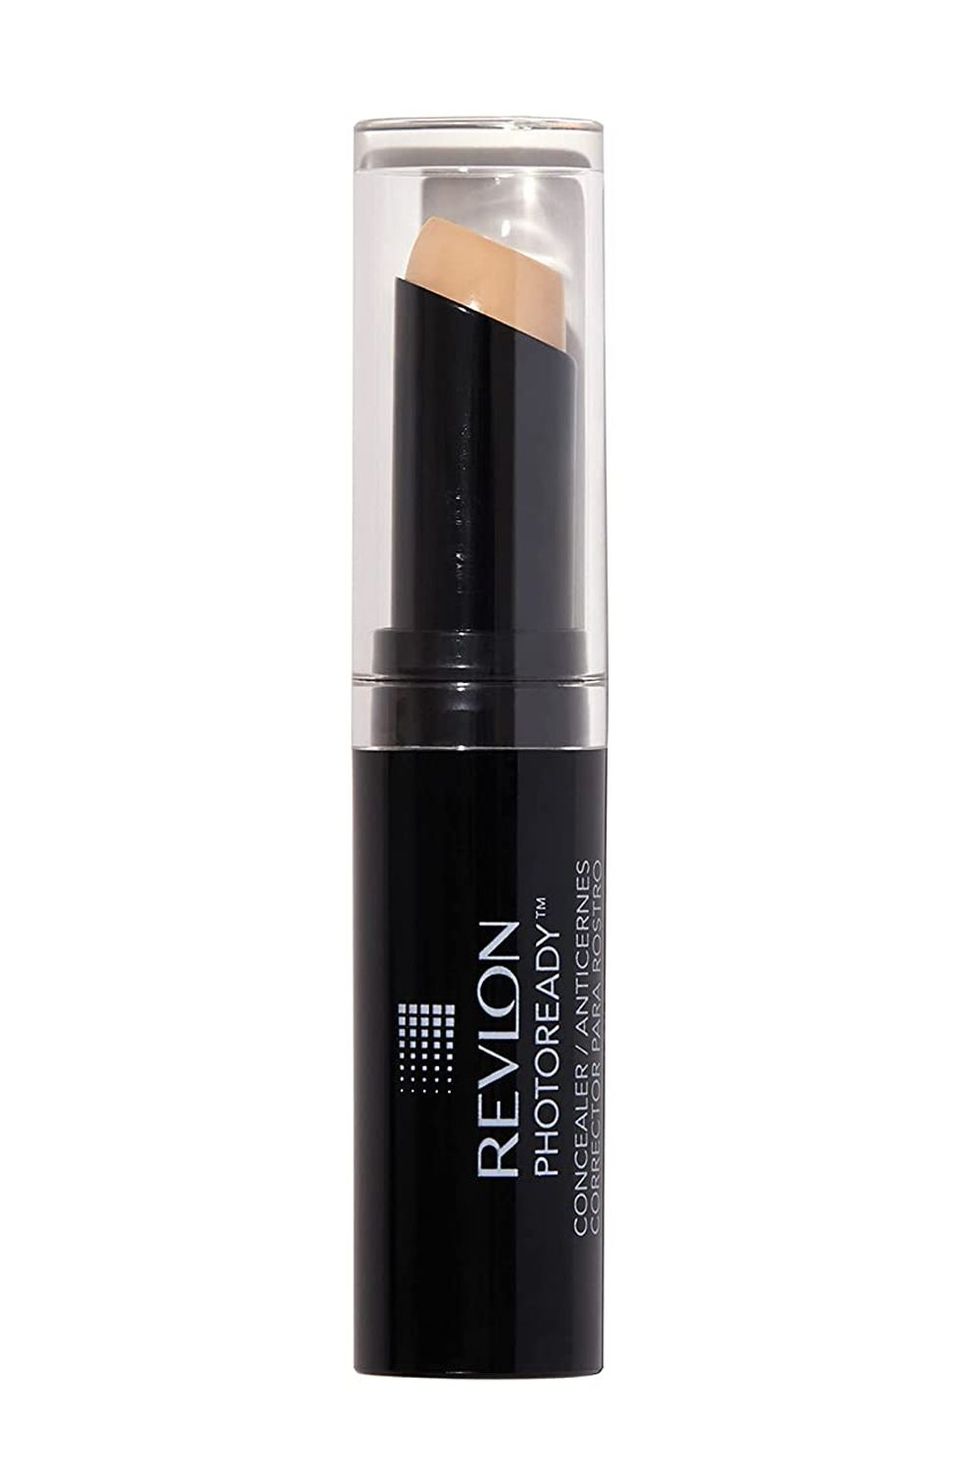 Revlon PhotoReady Concealer Stick